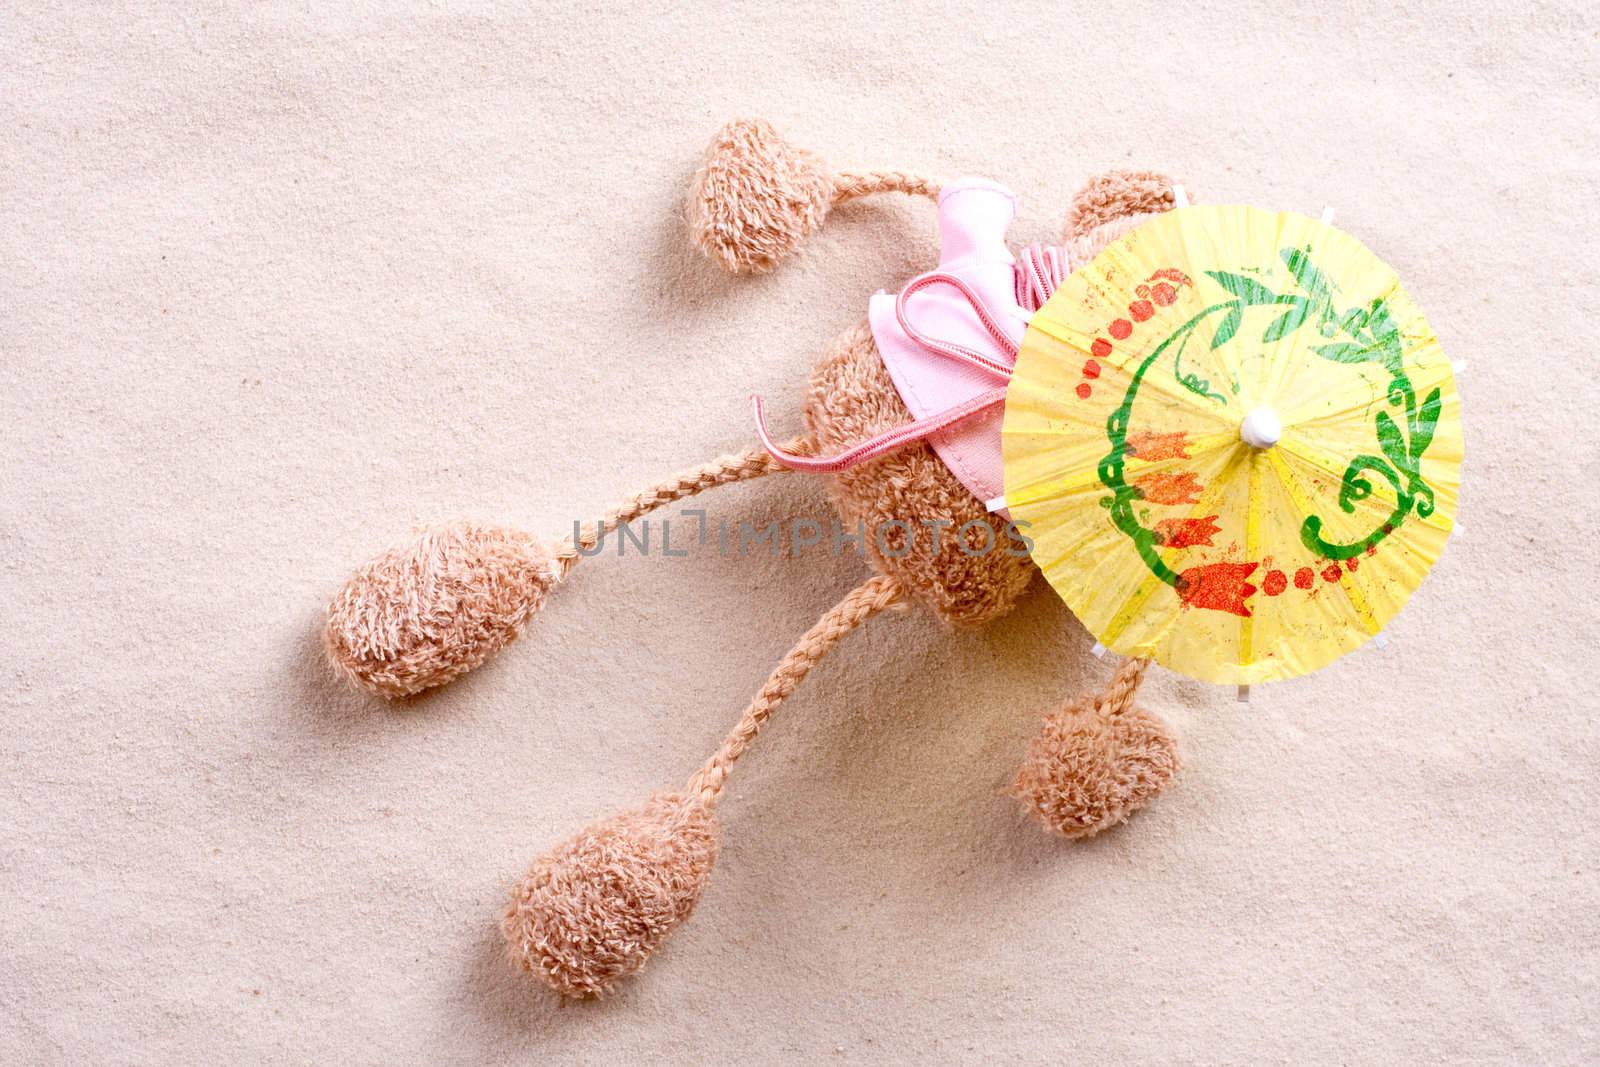 plush toy under the beach umbrella on the sand